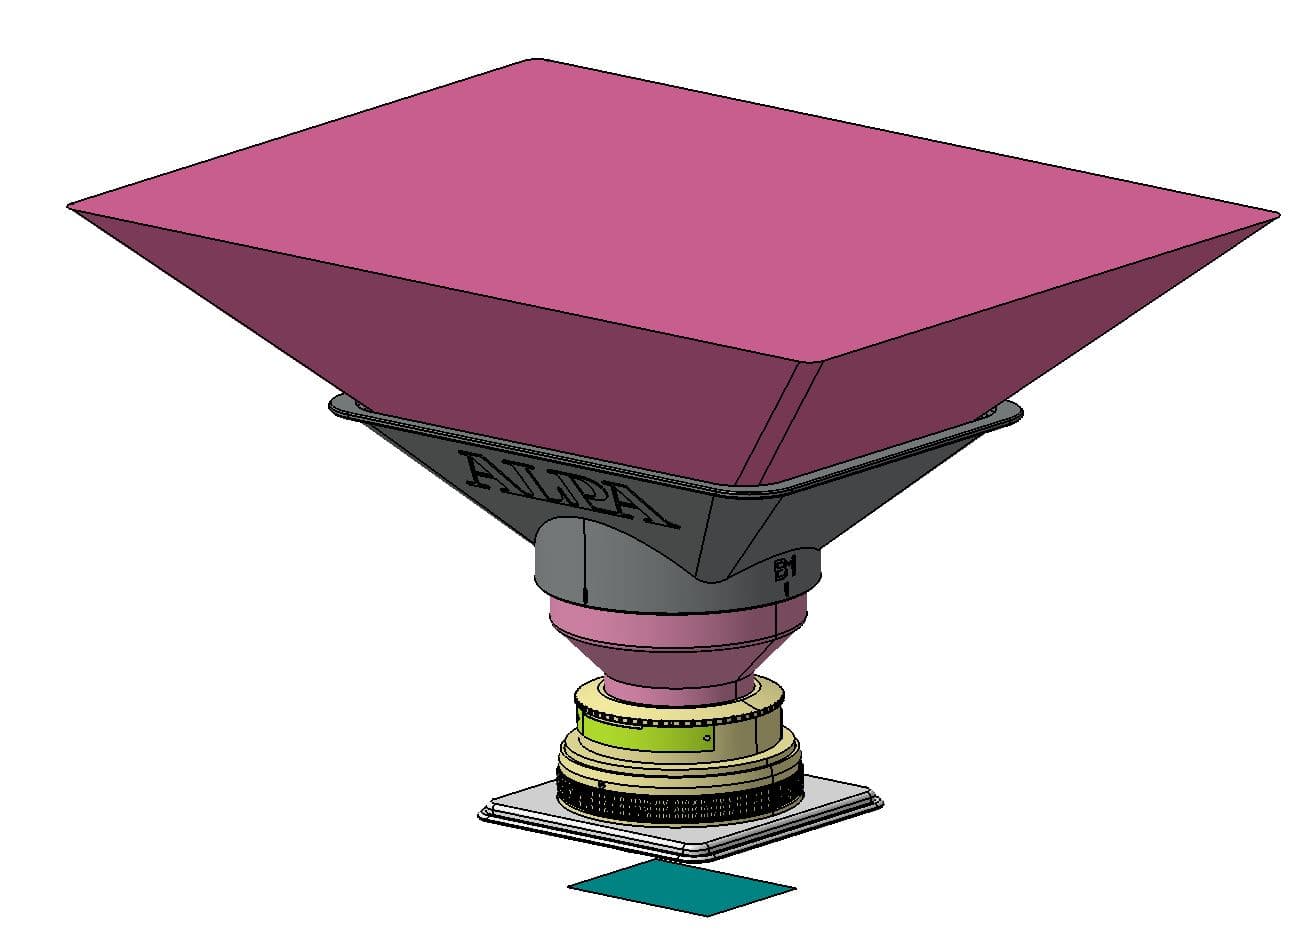 Parametric CAD model of lens shade